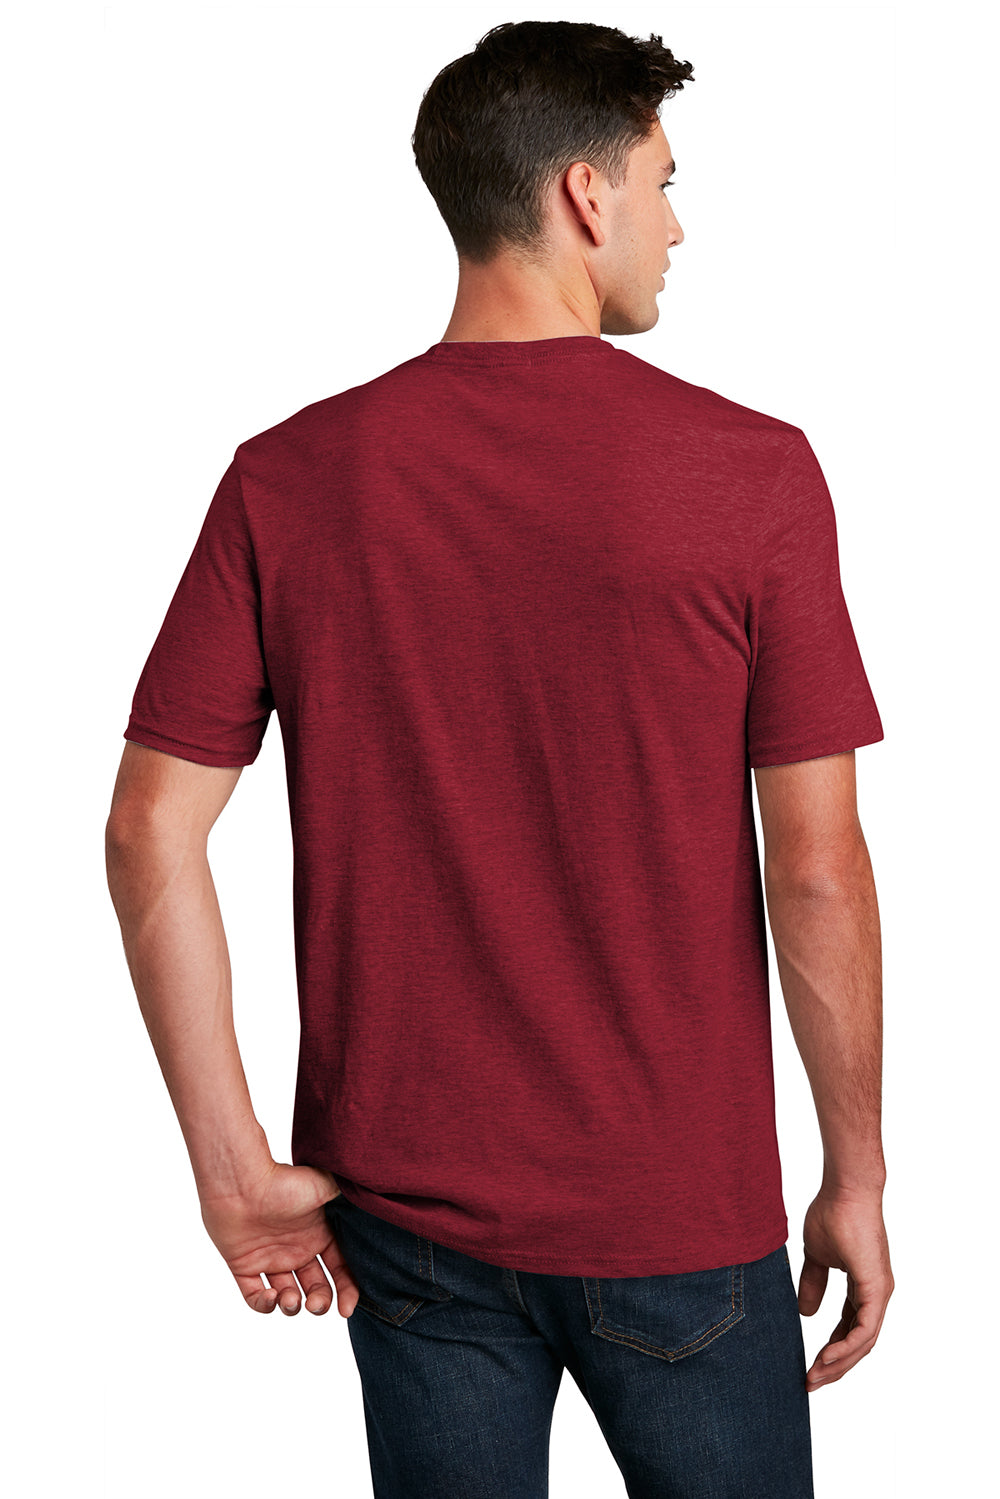 District DM108 Mens Perfect Blend Short Sleeve Crewneck T-Shirt Red Fleck Back